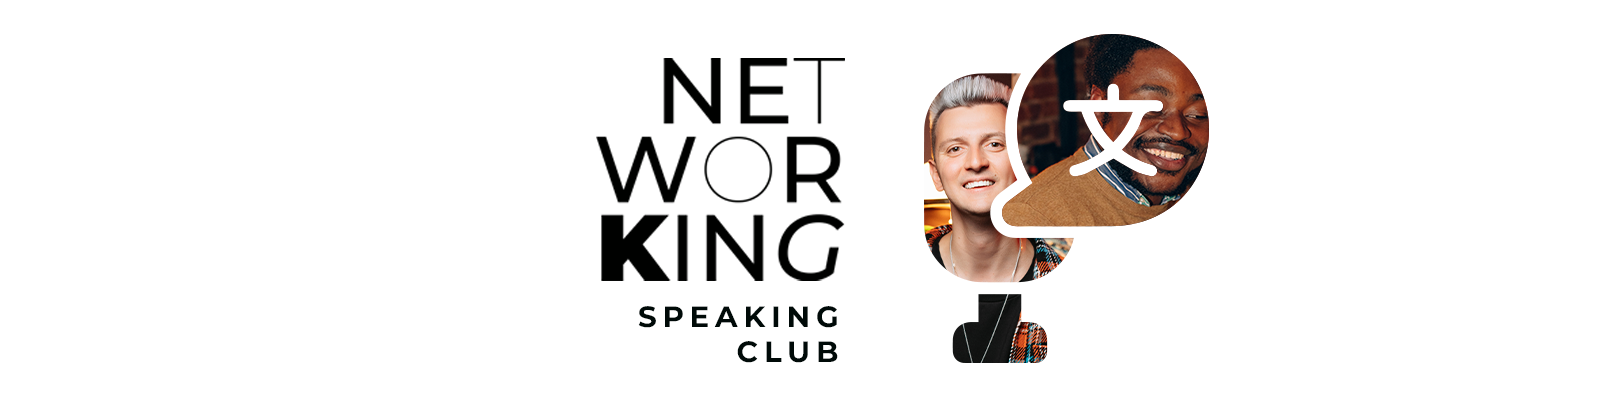 Networking Speaking Club #5